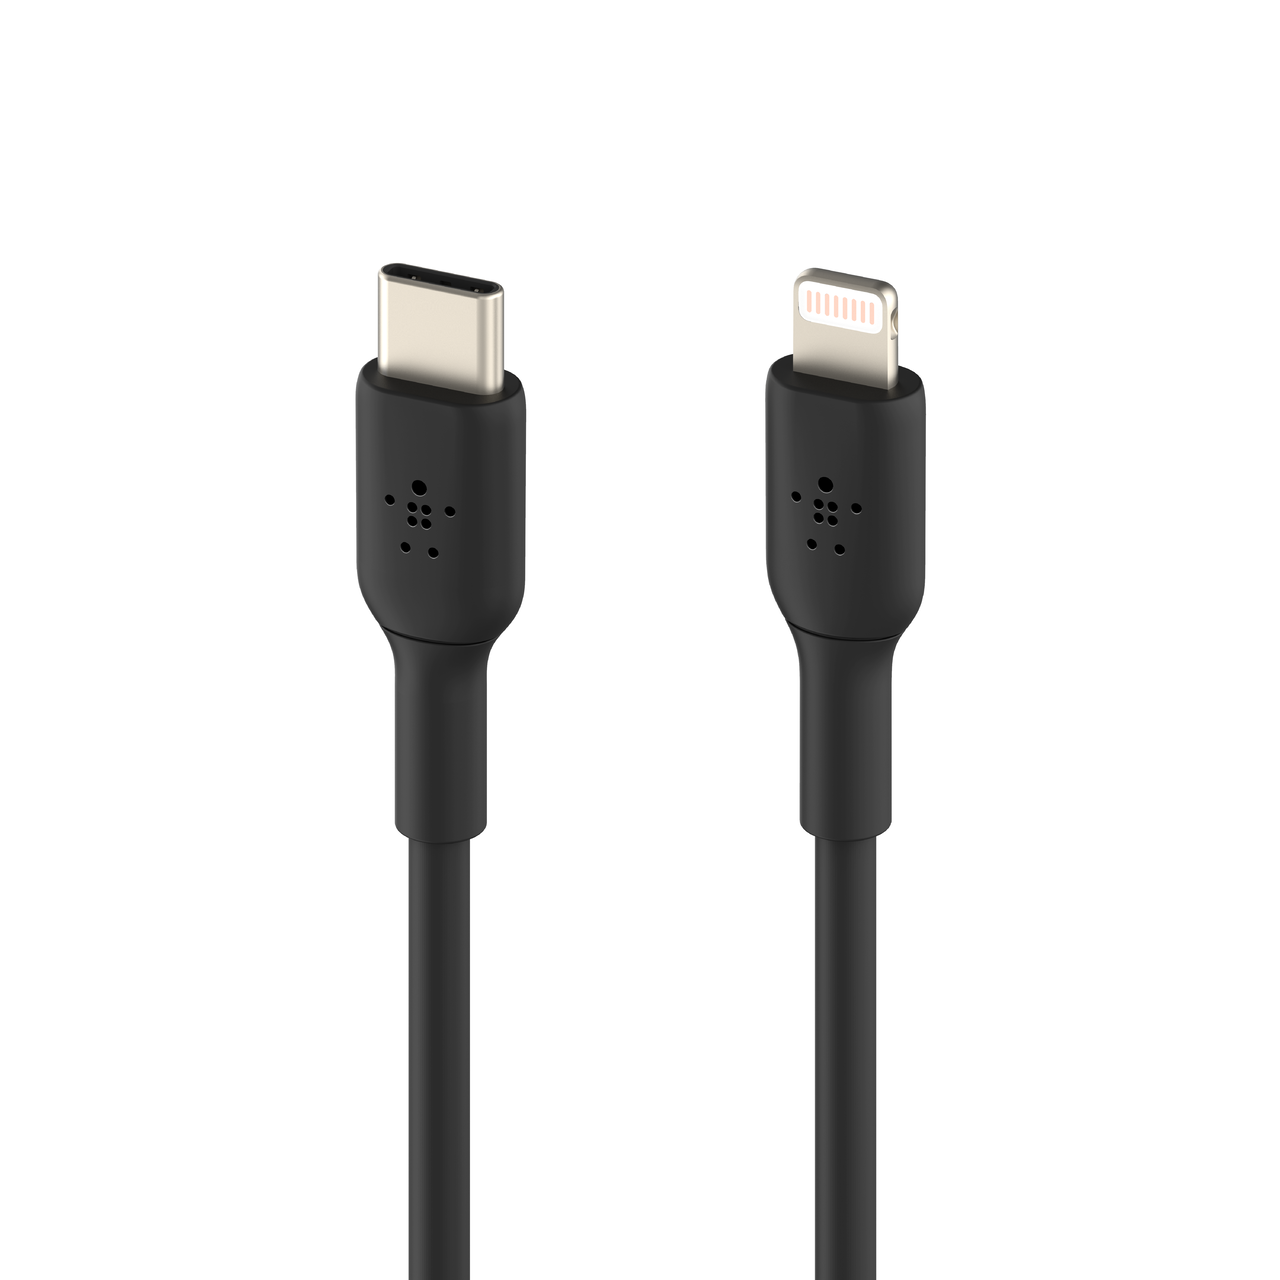 USB-C to Lightning Cable (1m / 3.3ft, Black) | Belkin